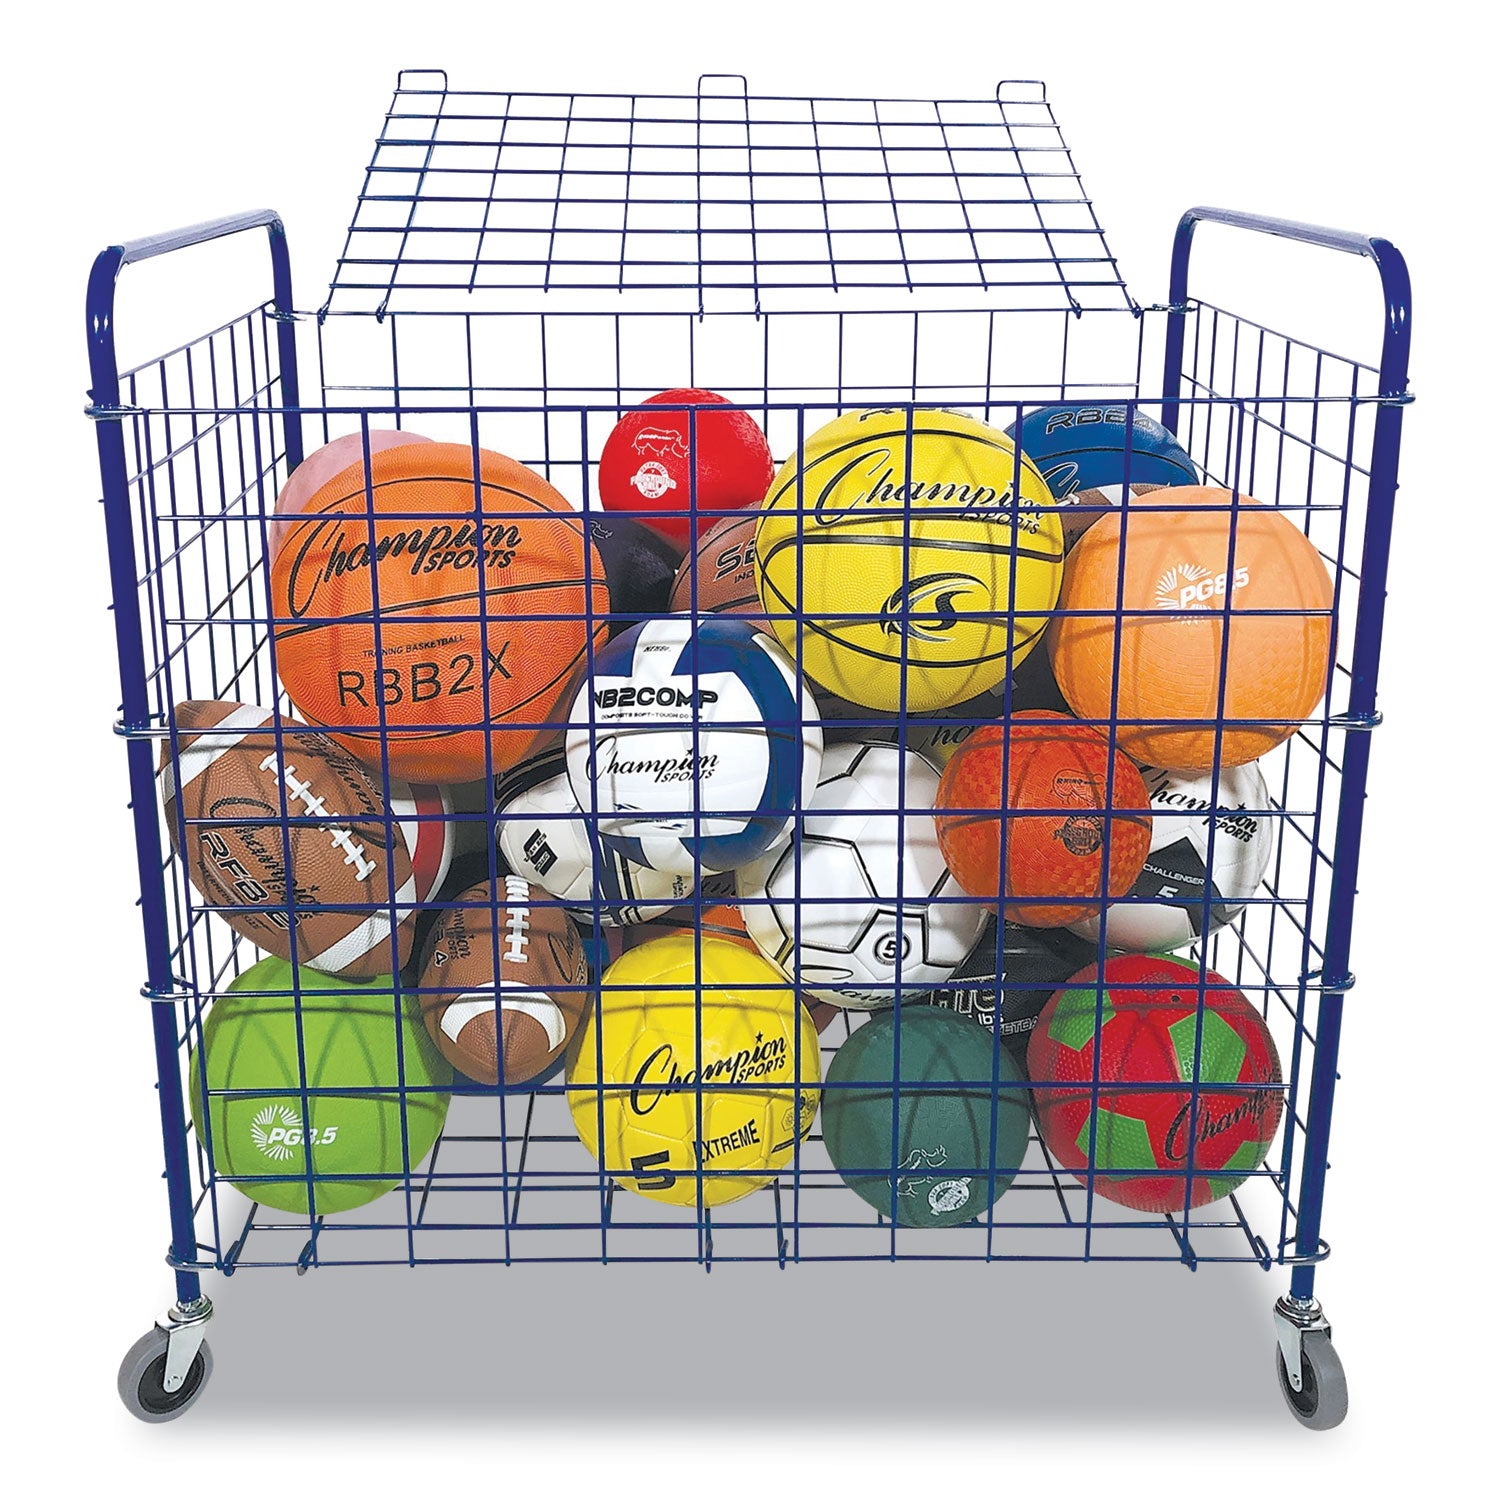 Lockable Ball Storage Cart, Fits Approximately 24 Balls, Metal, 37" x 22" x 20", Blue - 